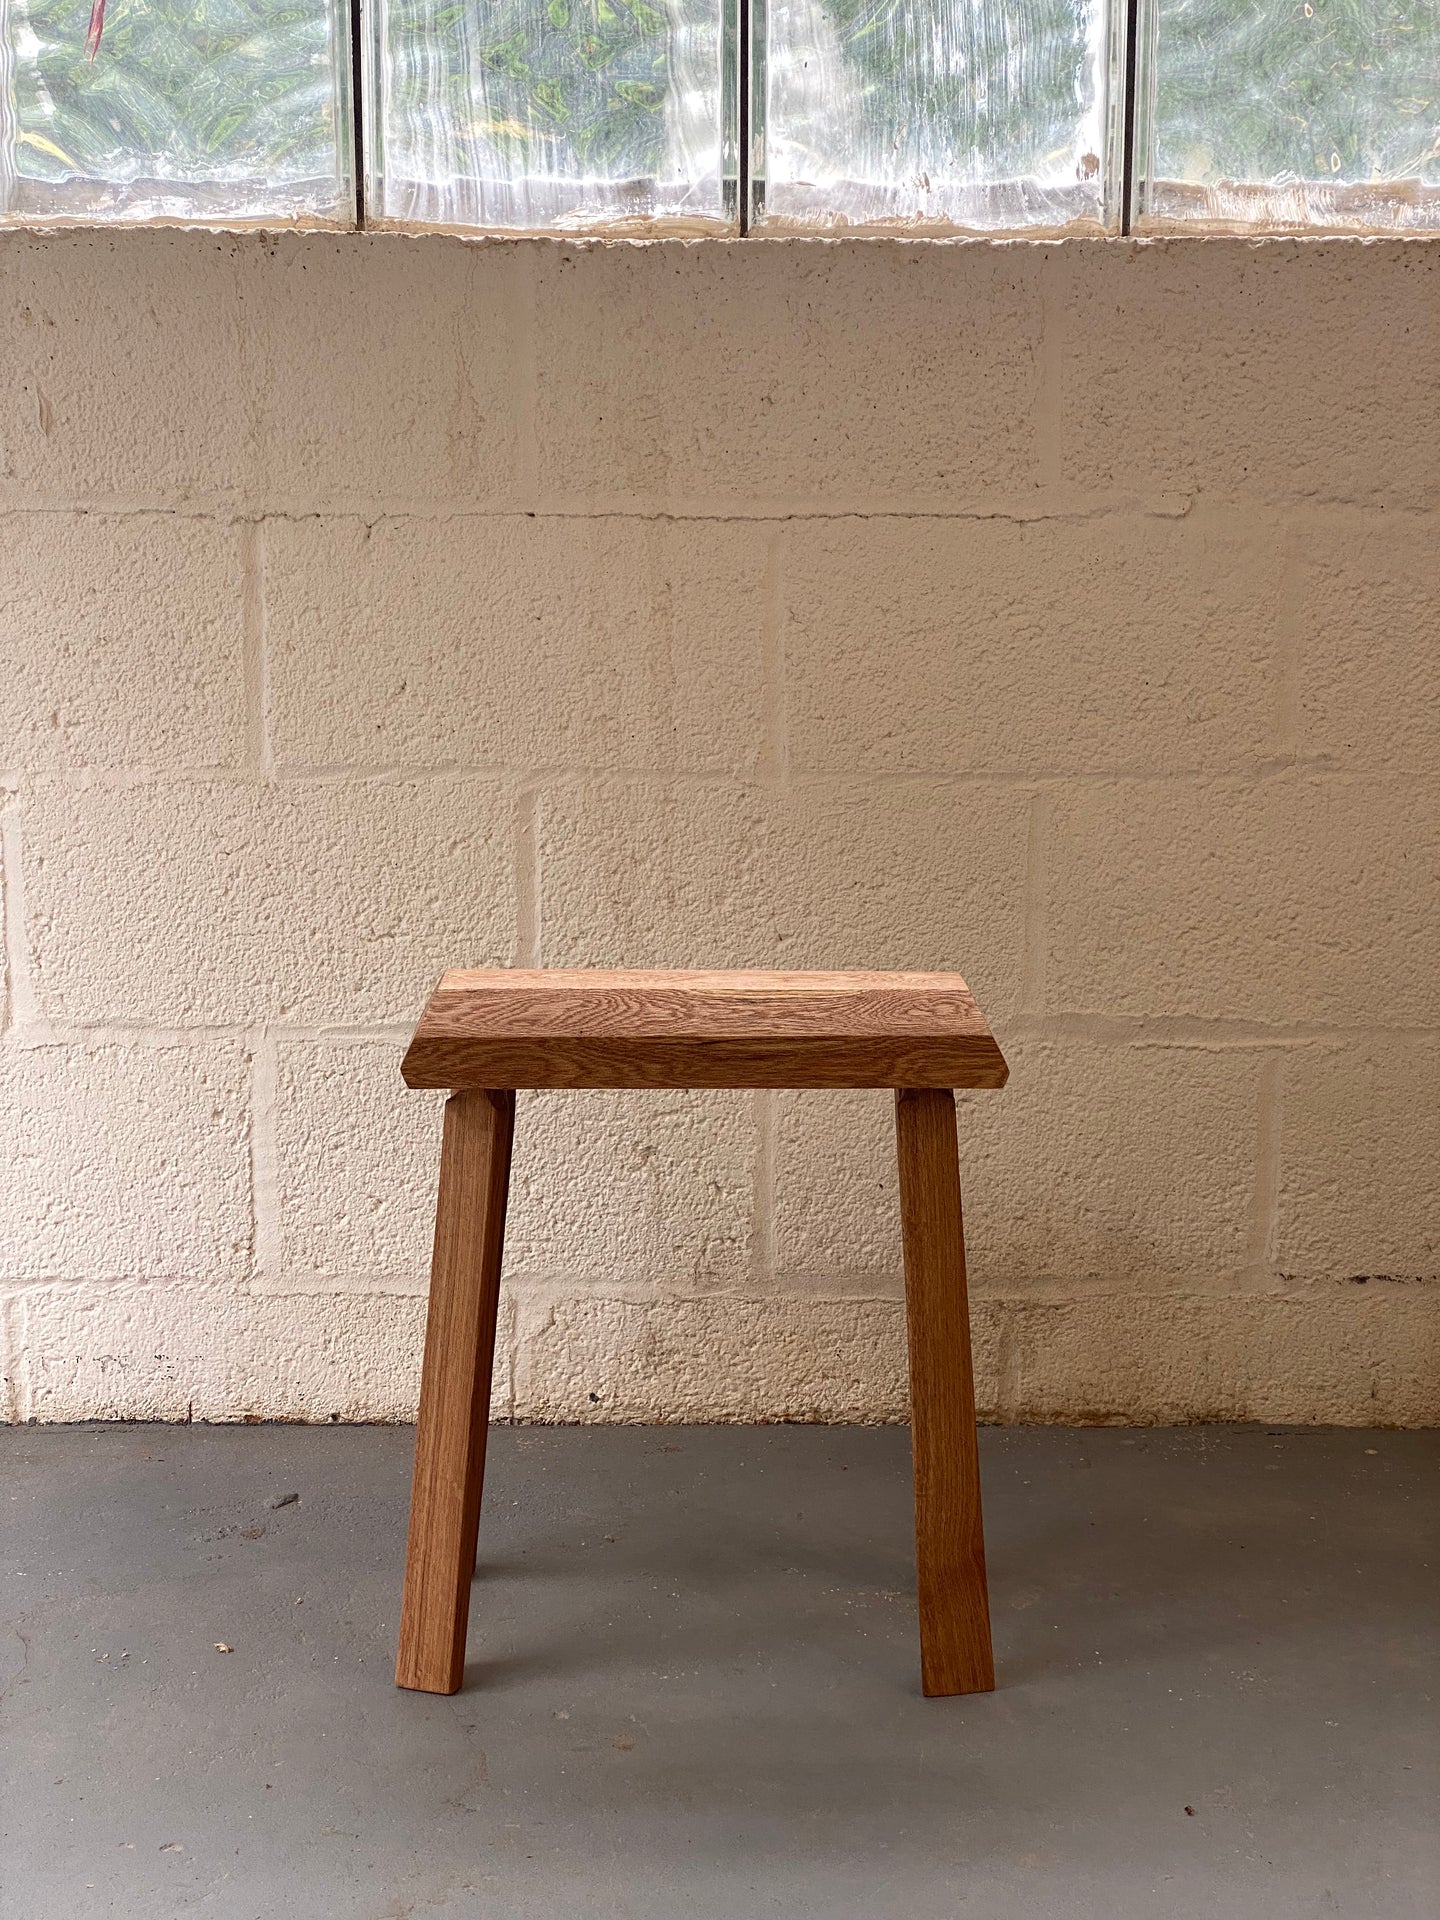 oak firewood stool